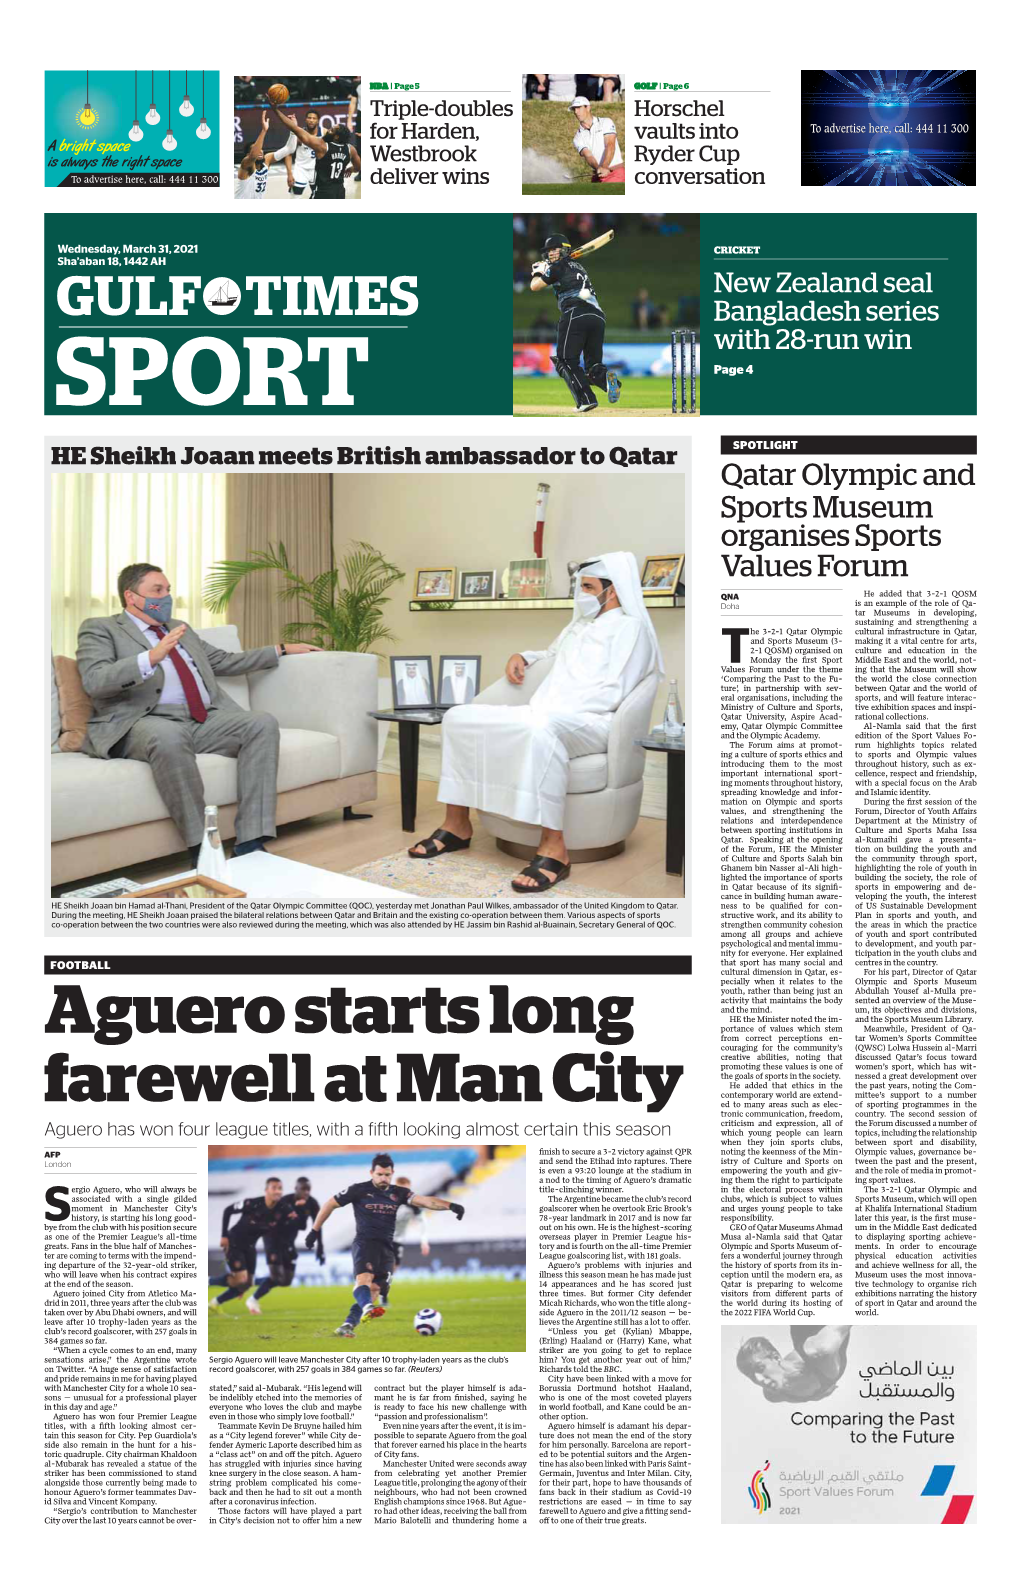 SPORT Page 4 HE Sheikh Joaan Meets British Ambassador to Qatar SPOTLIGHT Qatar Olympic and Sports Museum Organises Sports Values Forum